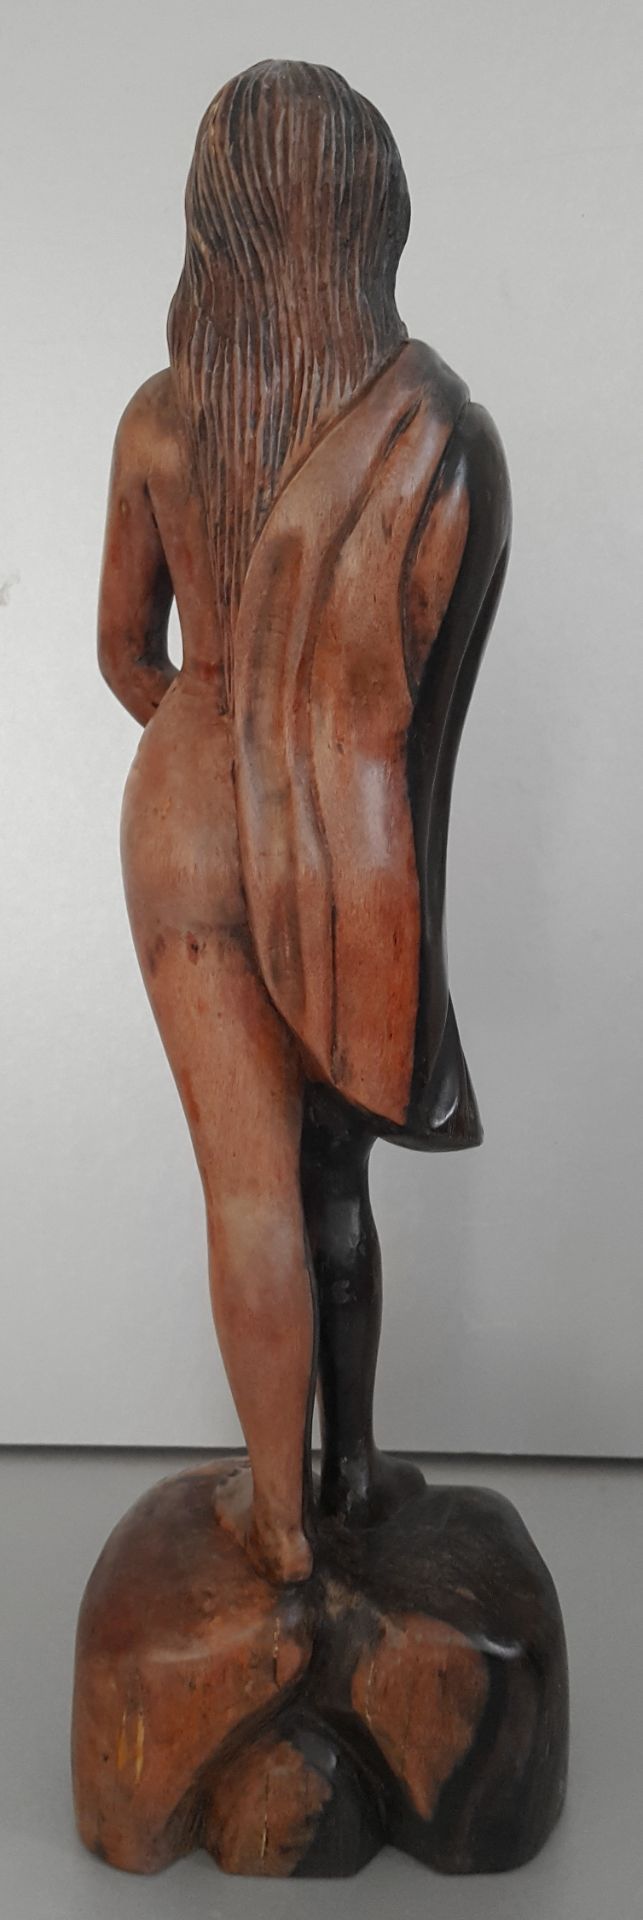 Vintage Retro Carved Wood Sculpture Female Nude - Image 2 of 3